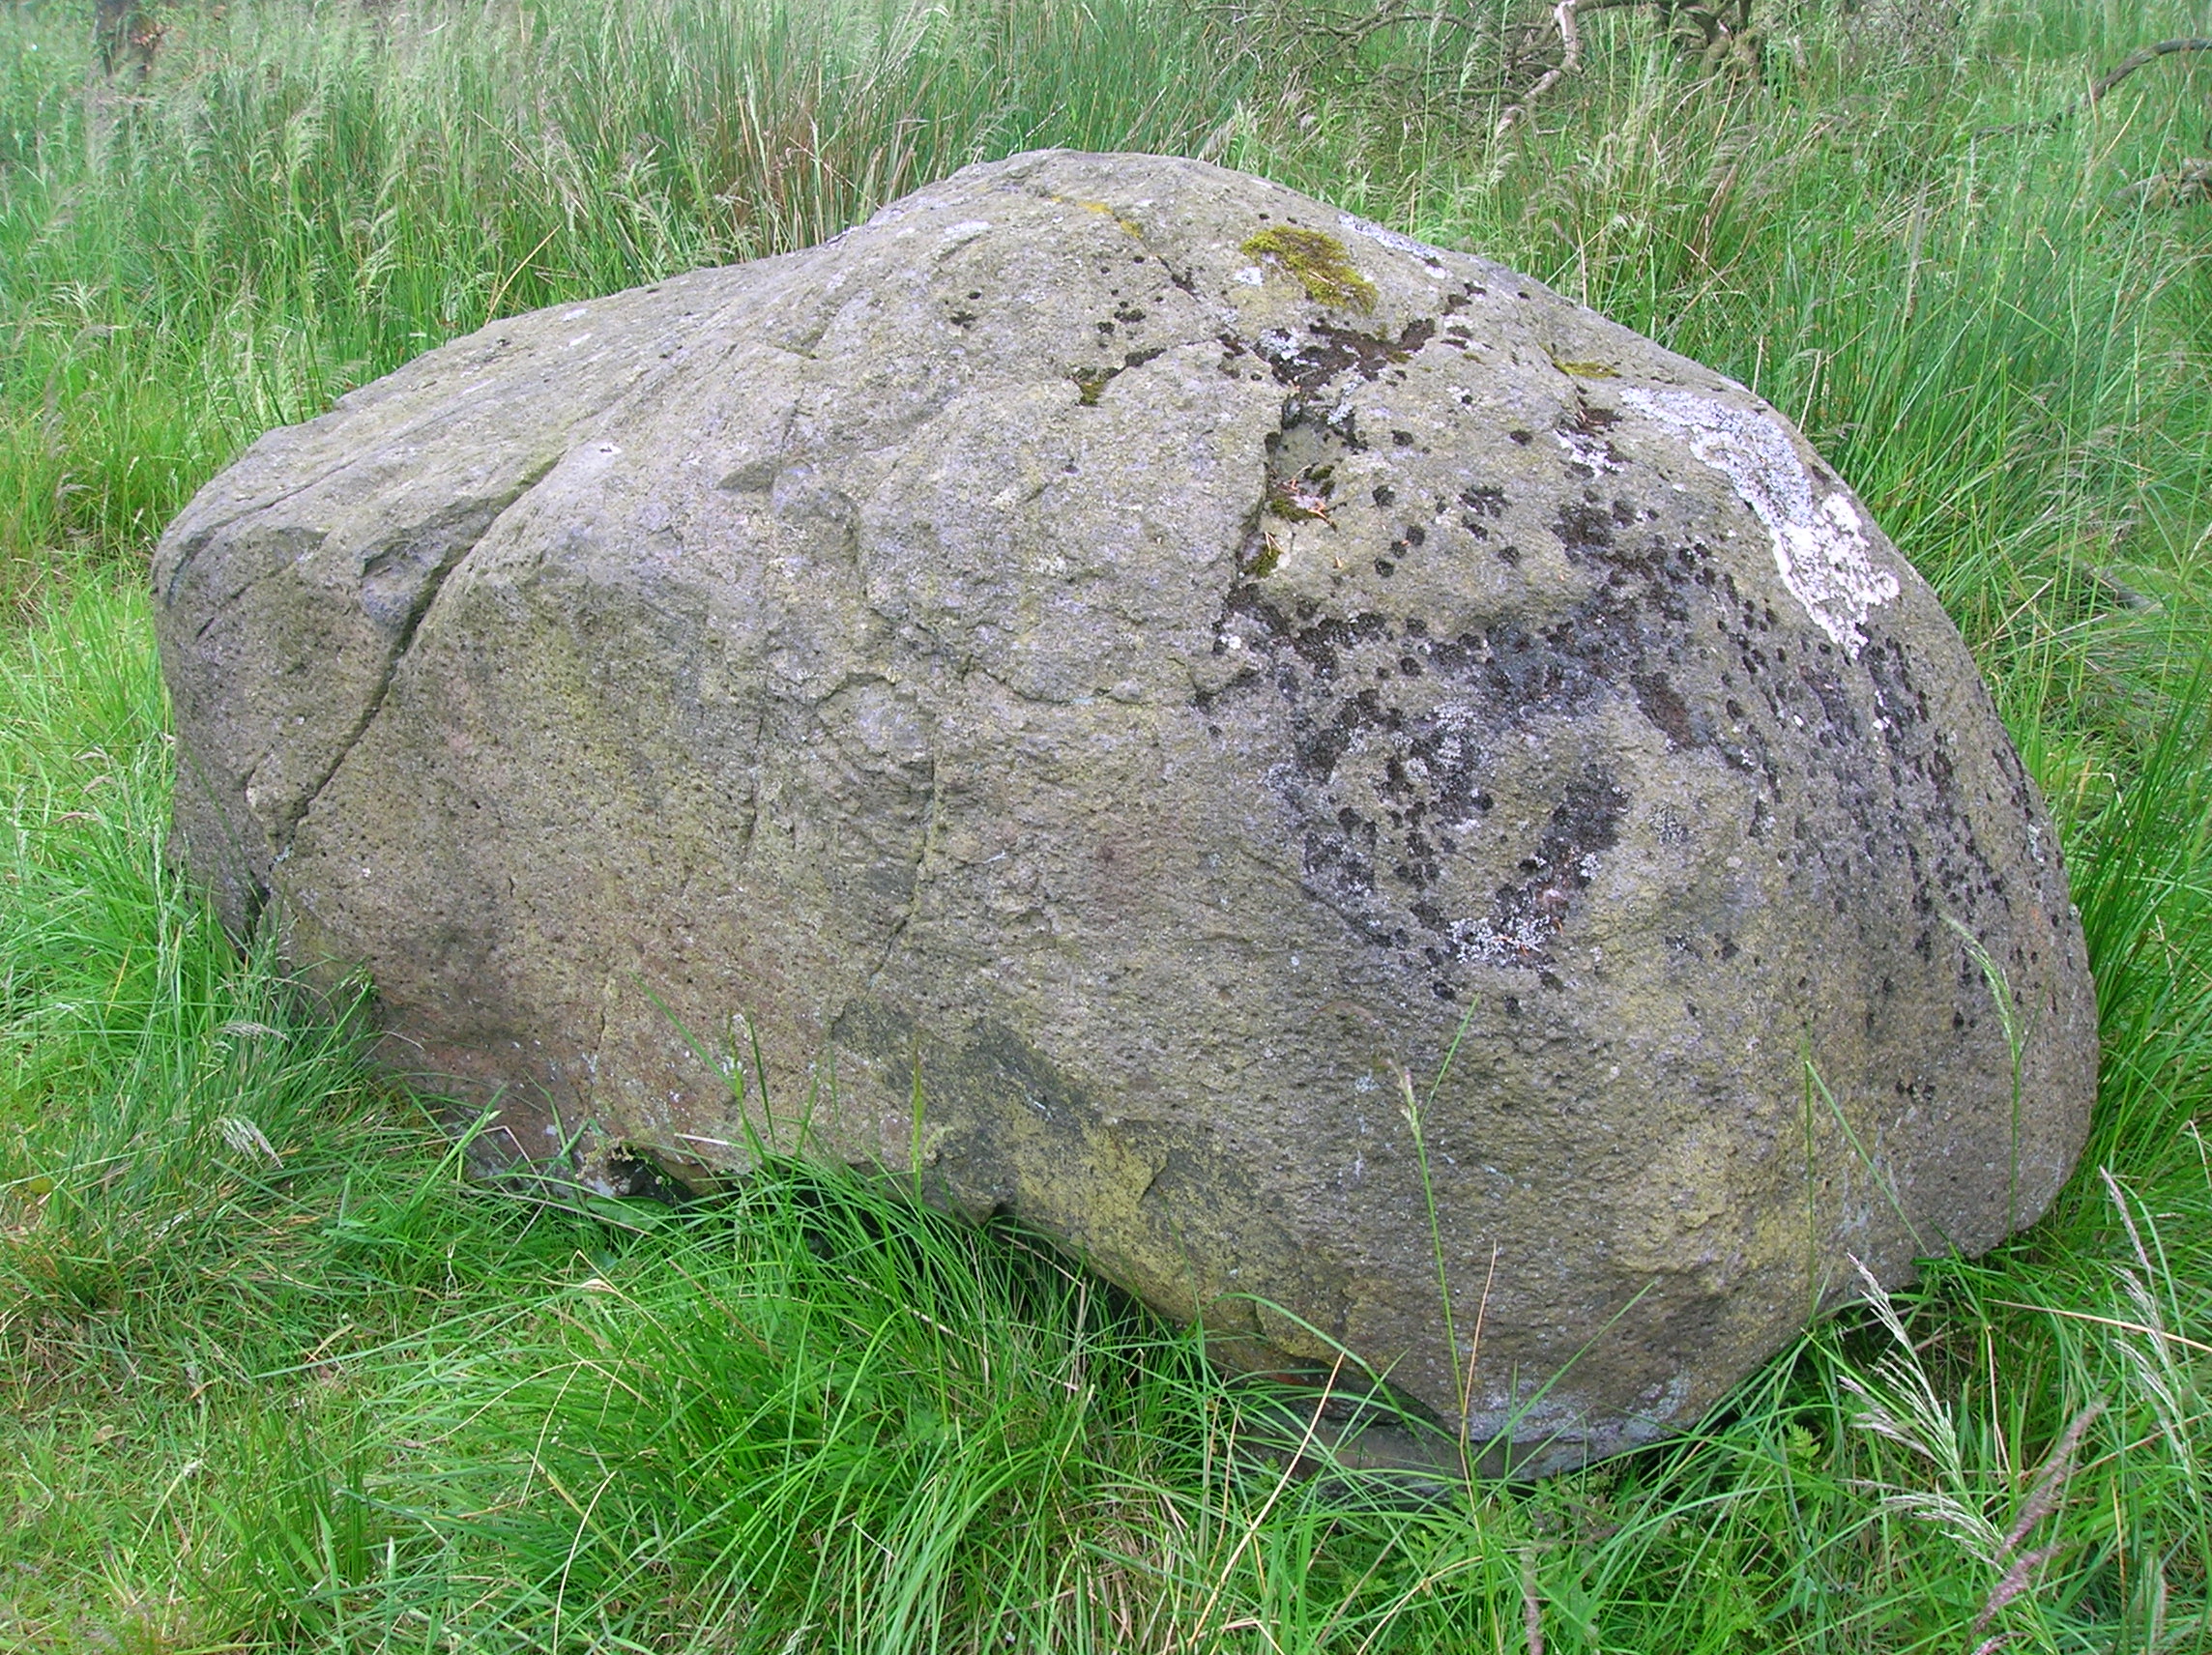 File:Cuff Hill logan stone 2.JPG - Wikimedia Commons